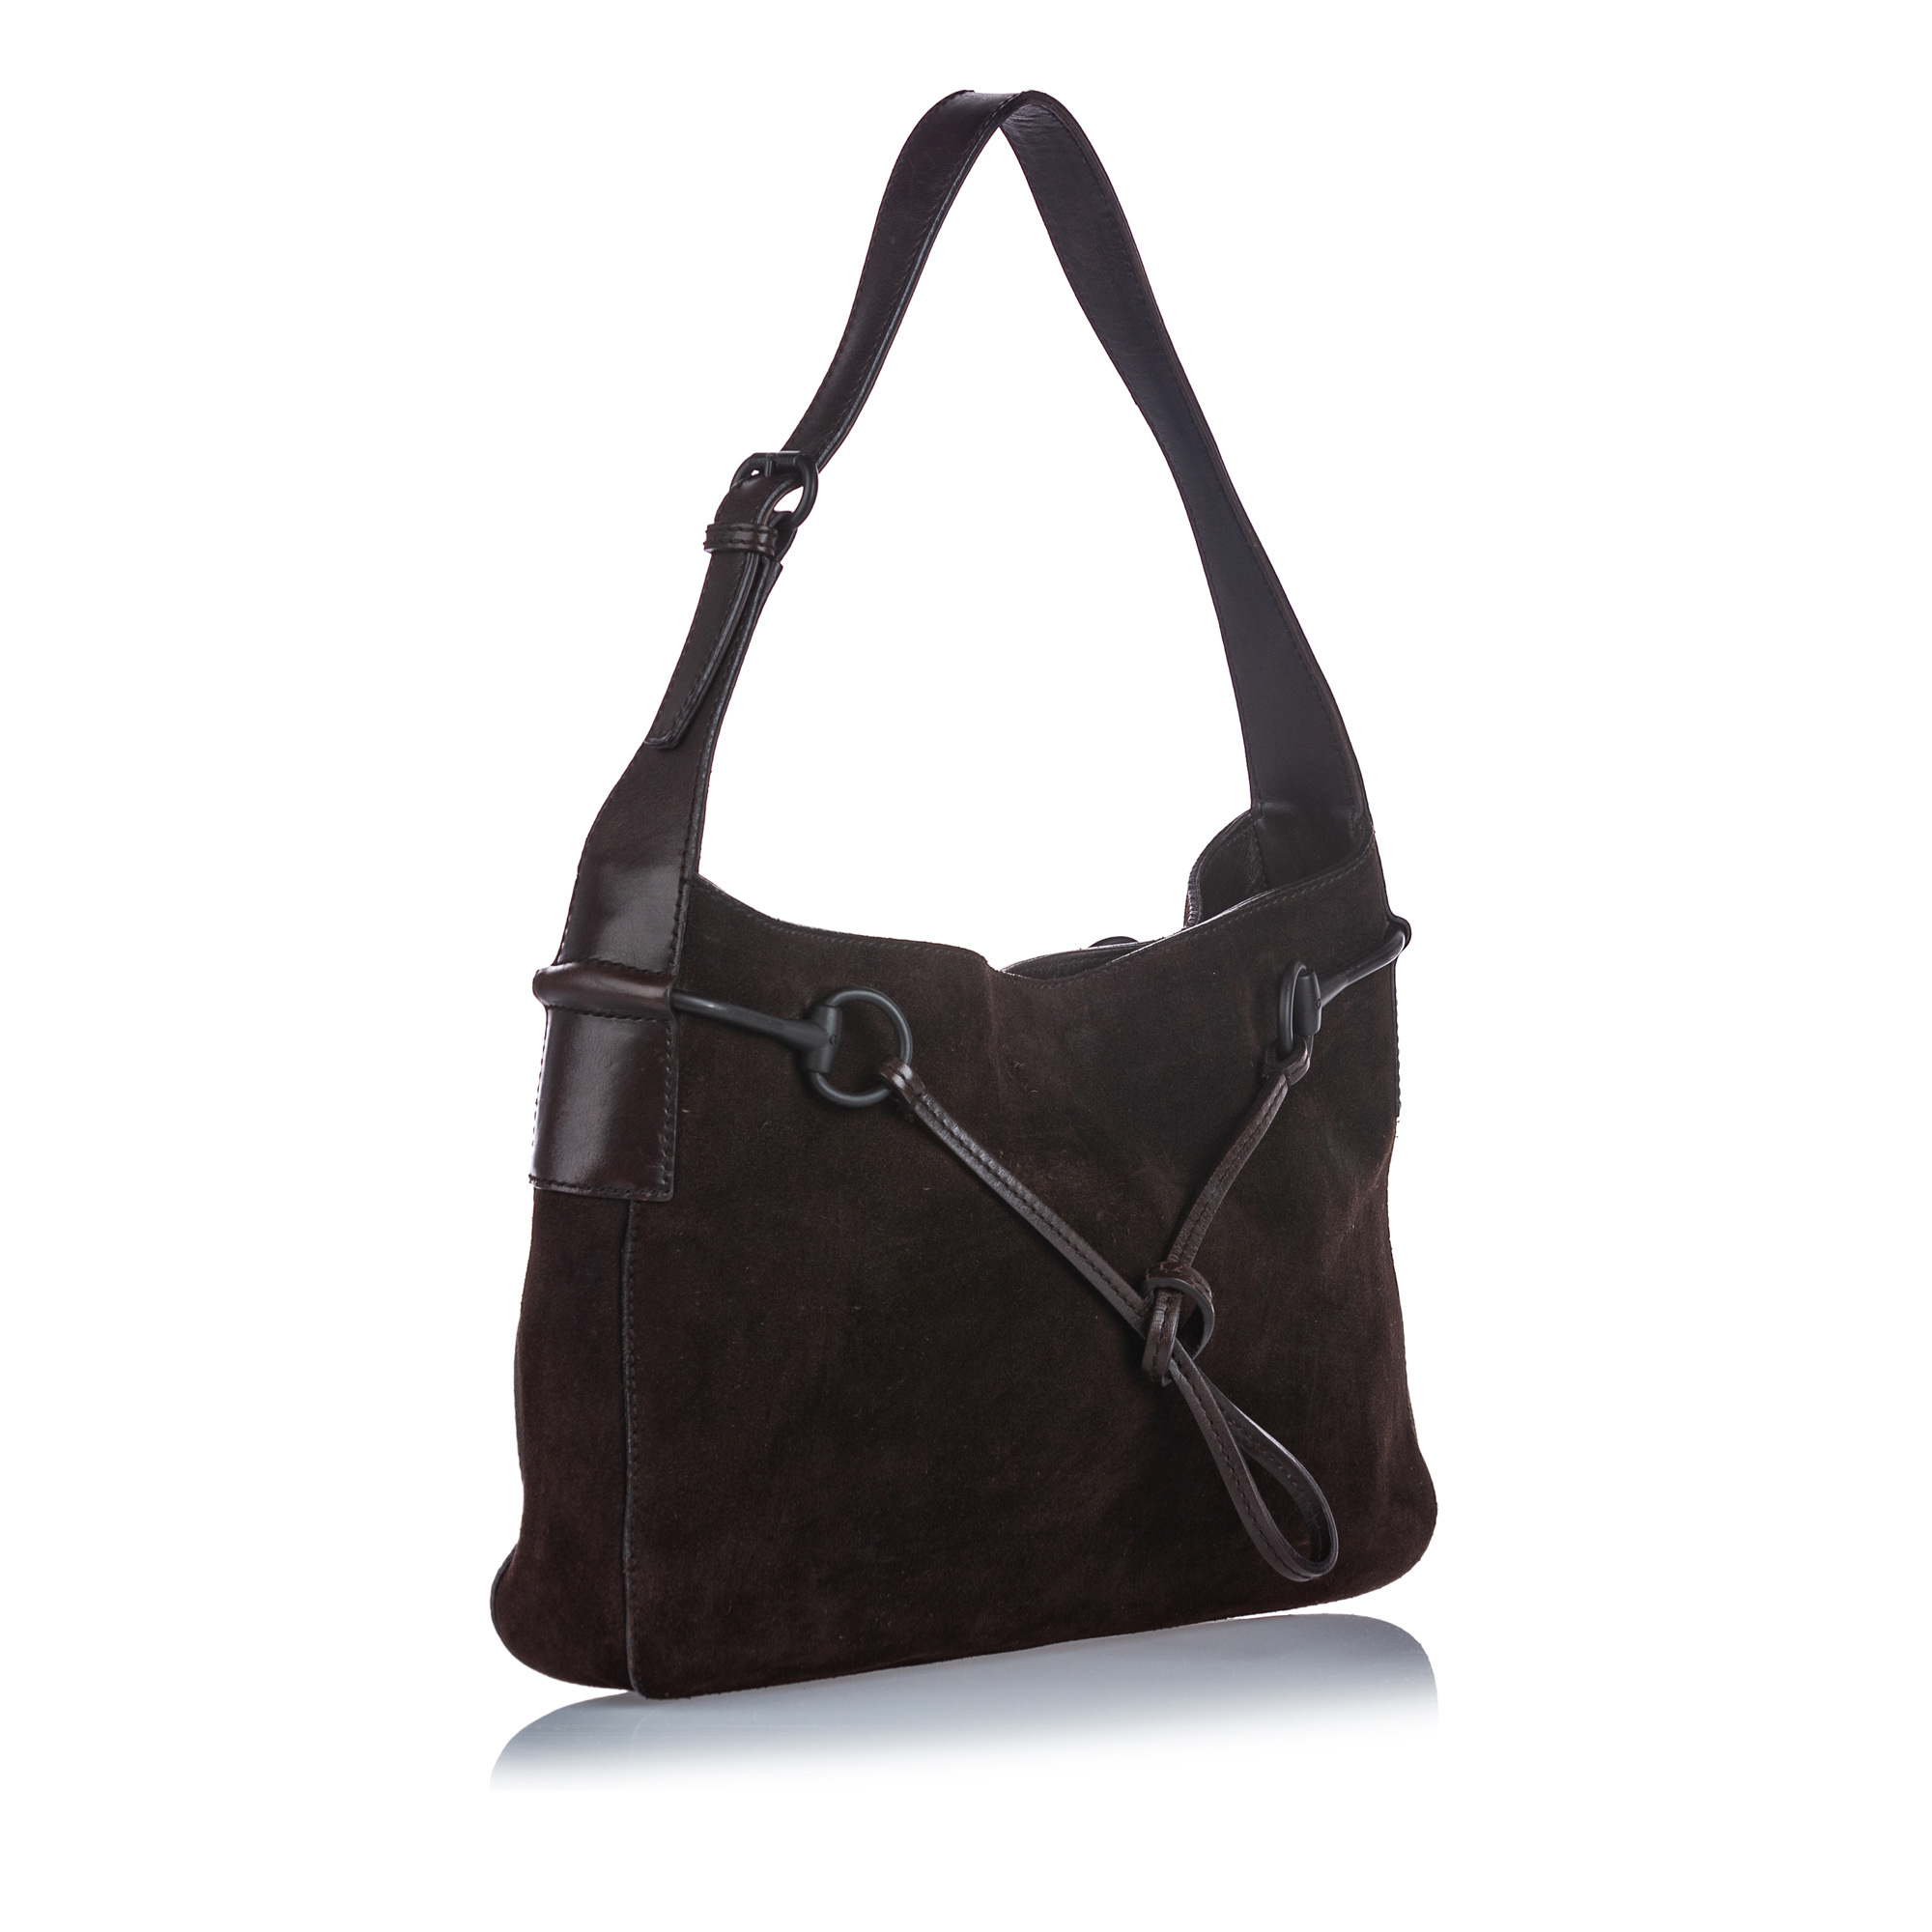 Pre-Loved Gucci Brown Dark Suede Leather Horsebit Shoulder Bag ITALY | eBay